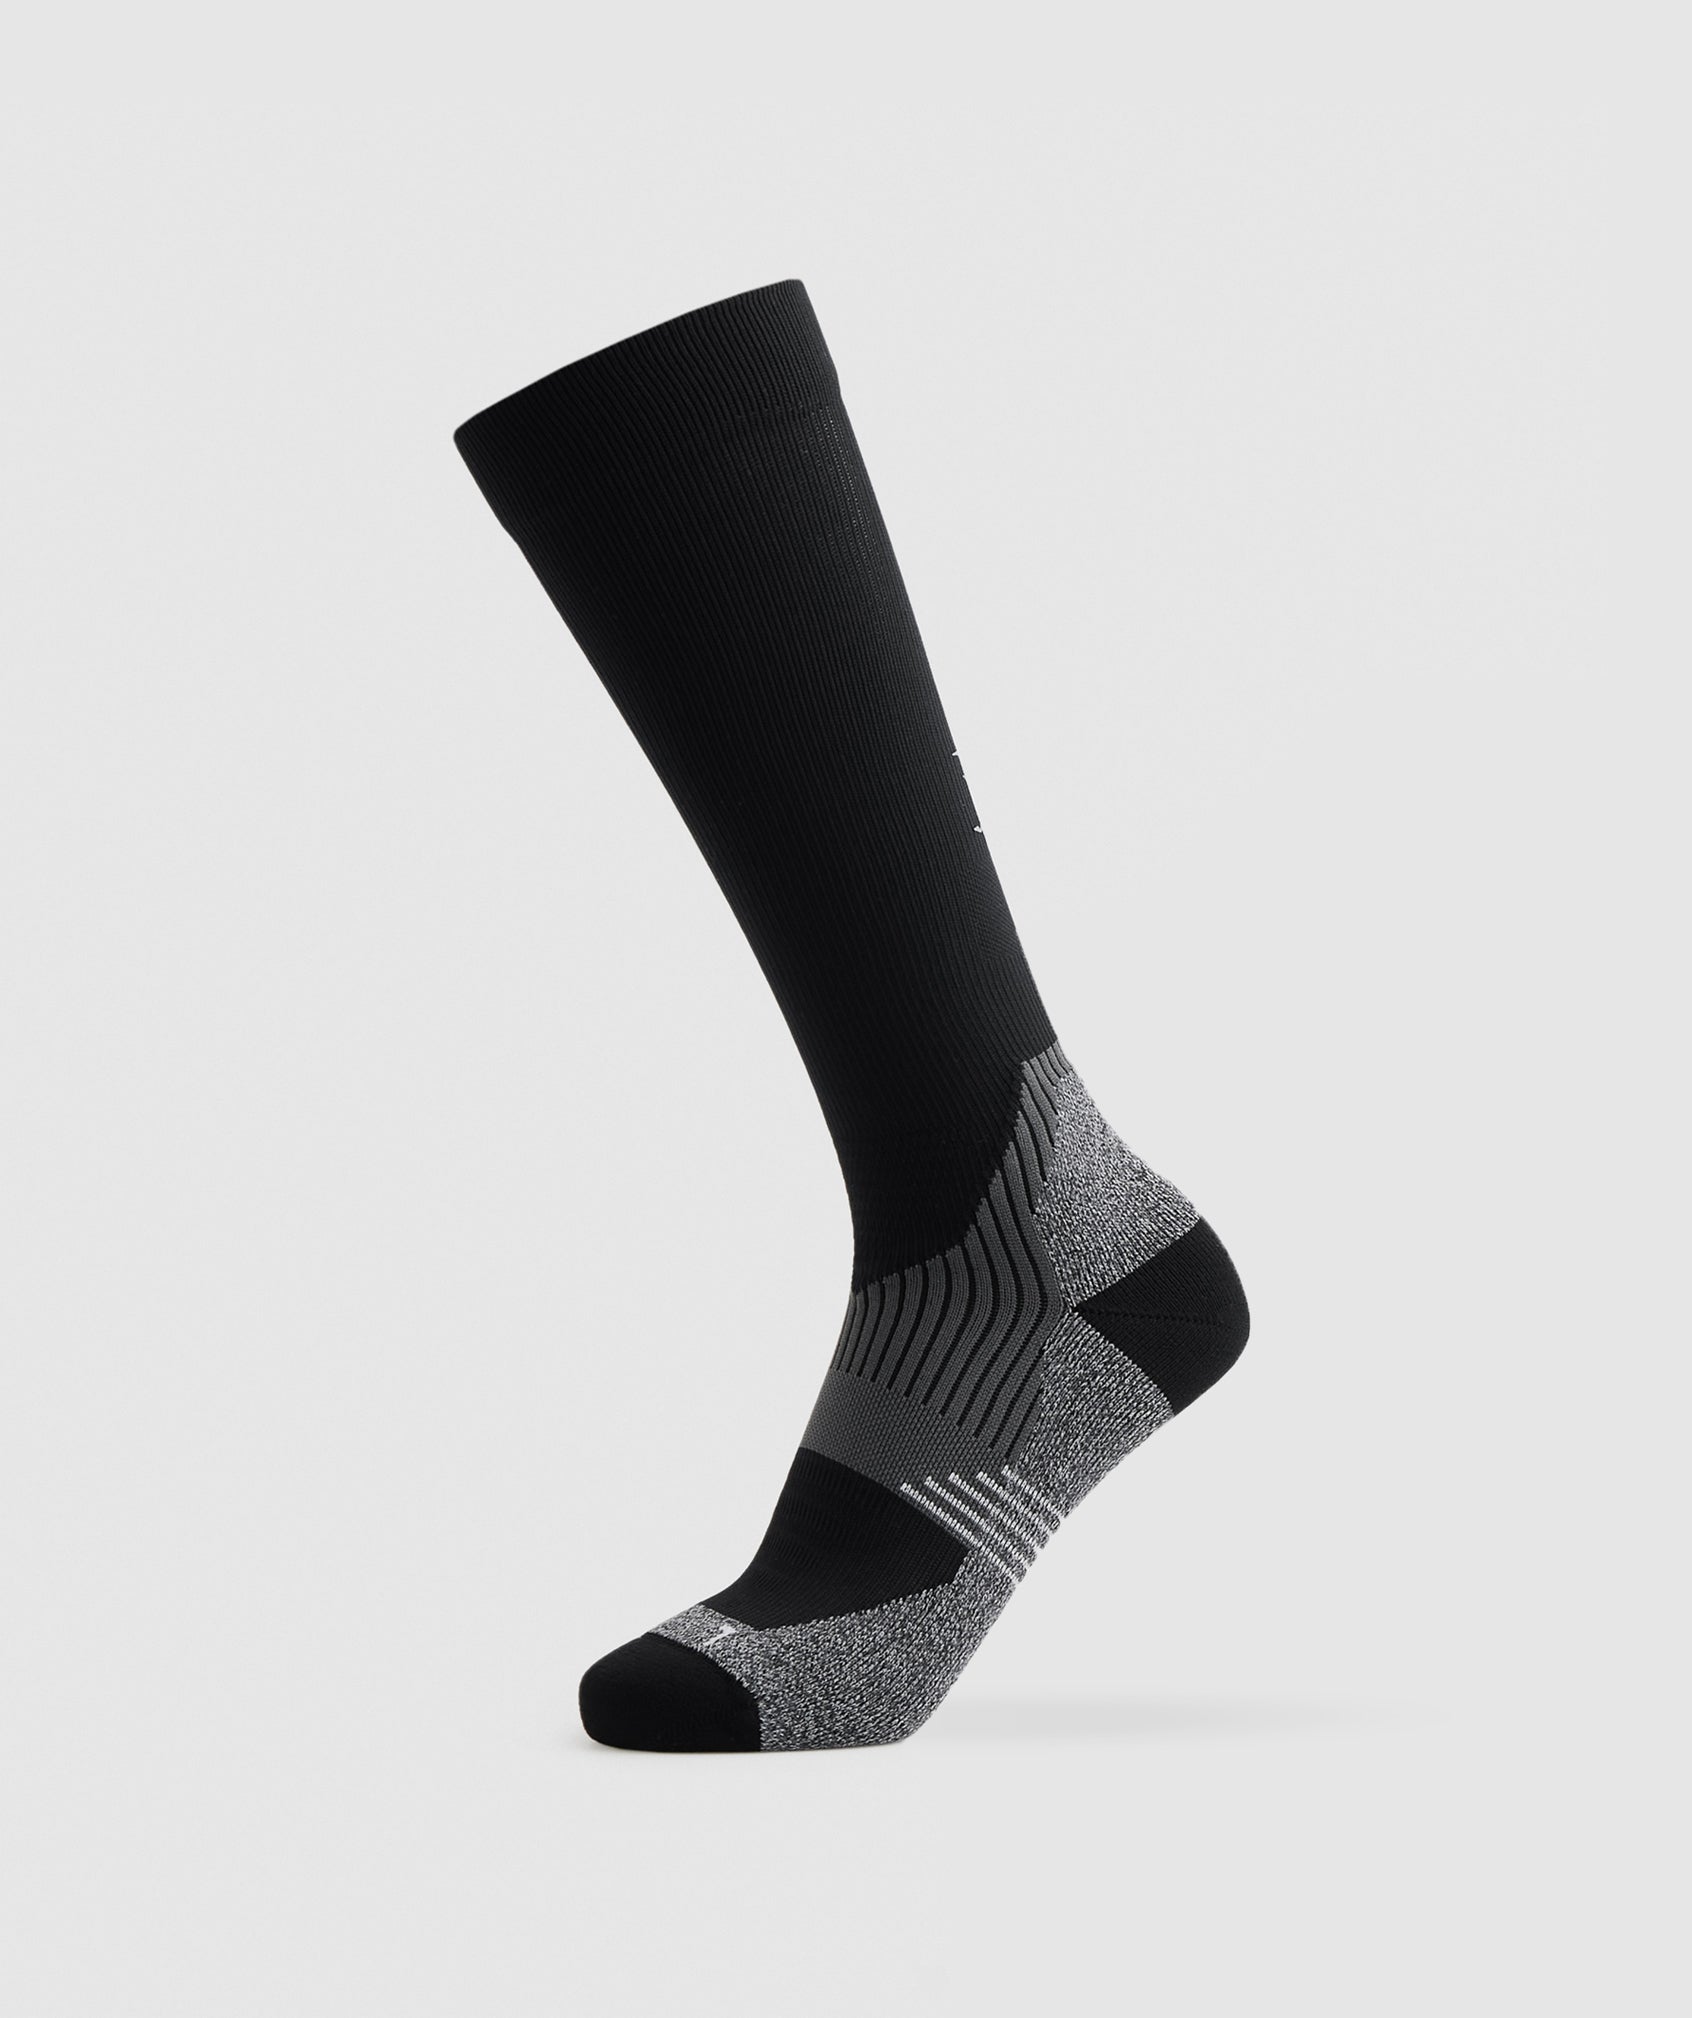 Long Performance Socks in Black - view 1